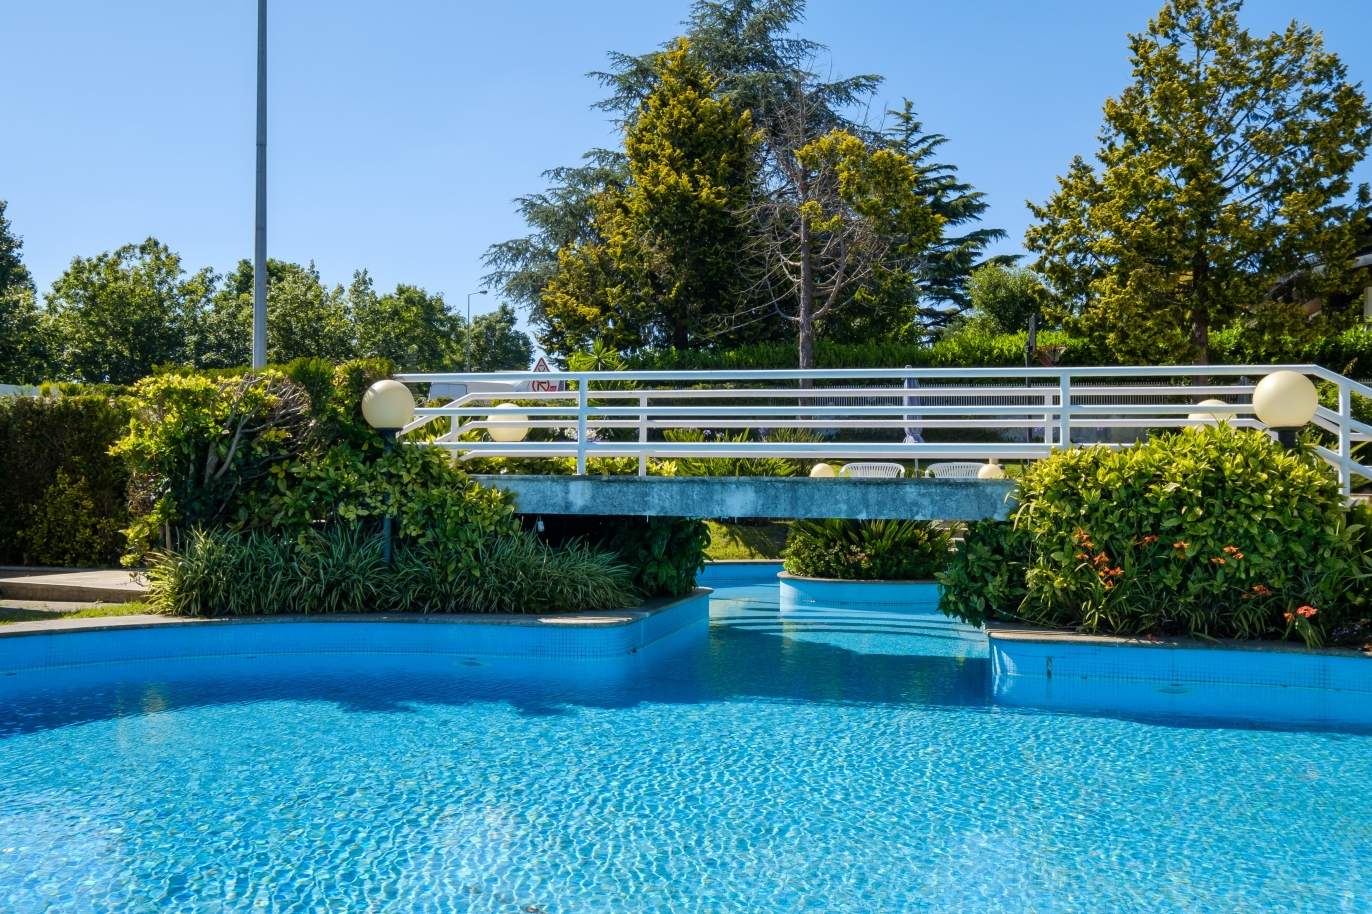 Sale of villa with pool and terrace, Maia, Porto, Portugal_142177